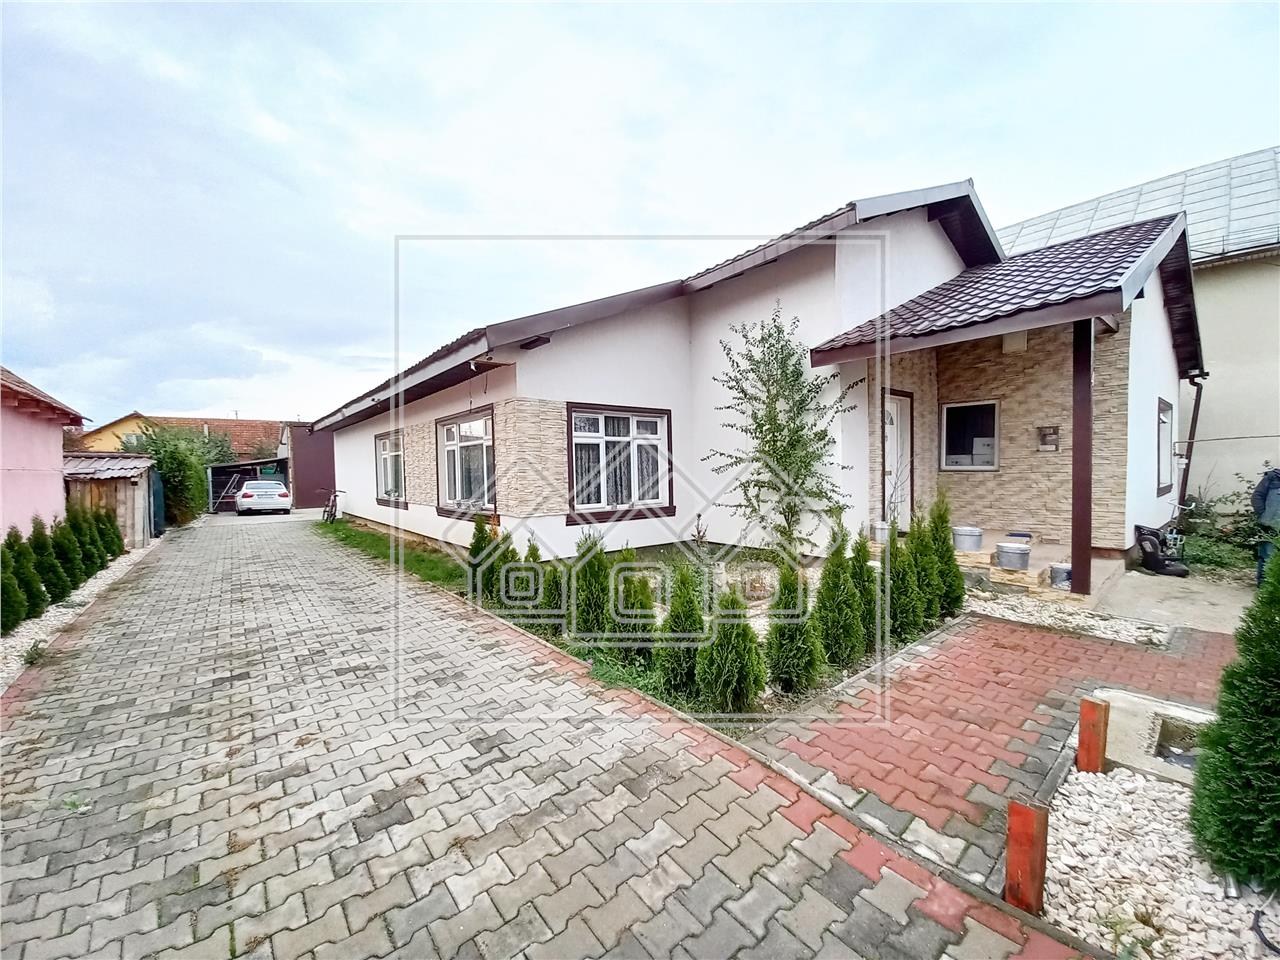 Casa de vanzare in Alba Iulia - Barabant - 4 camere - 2 bai